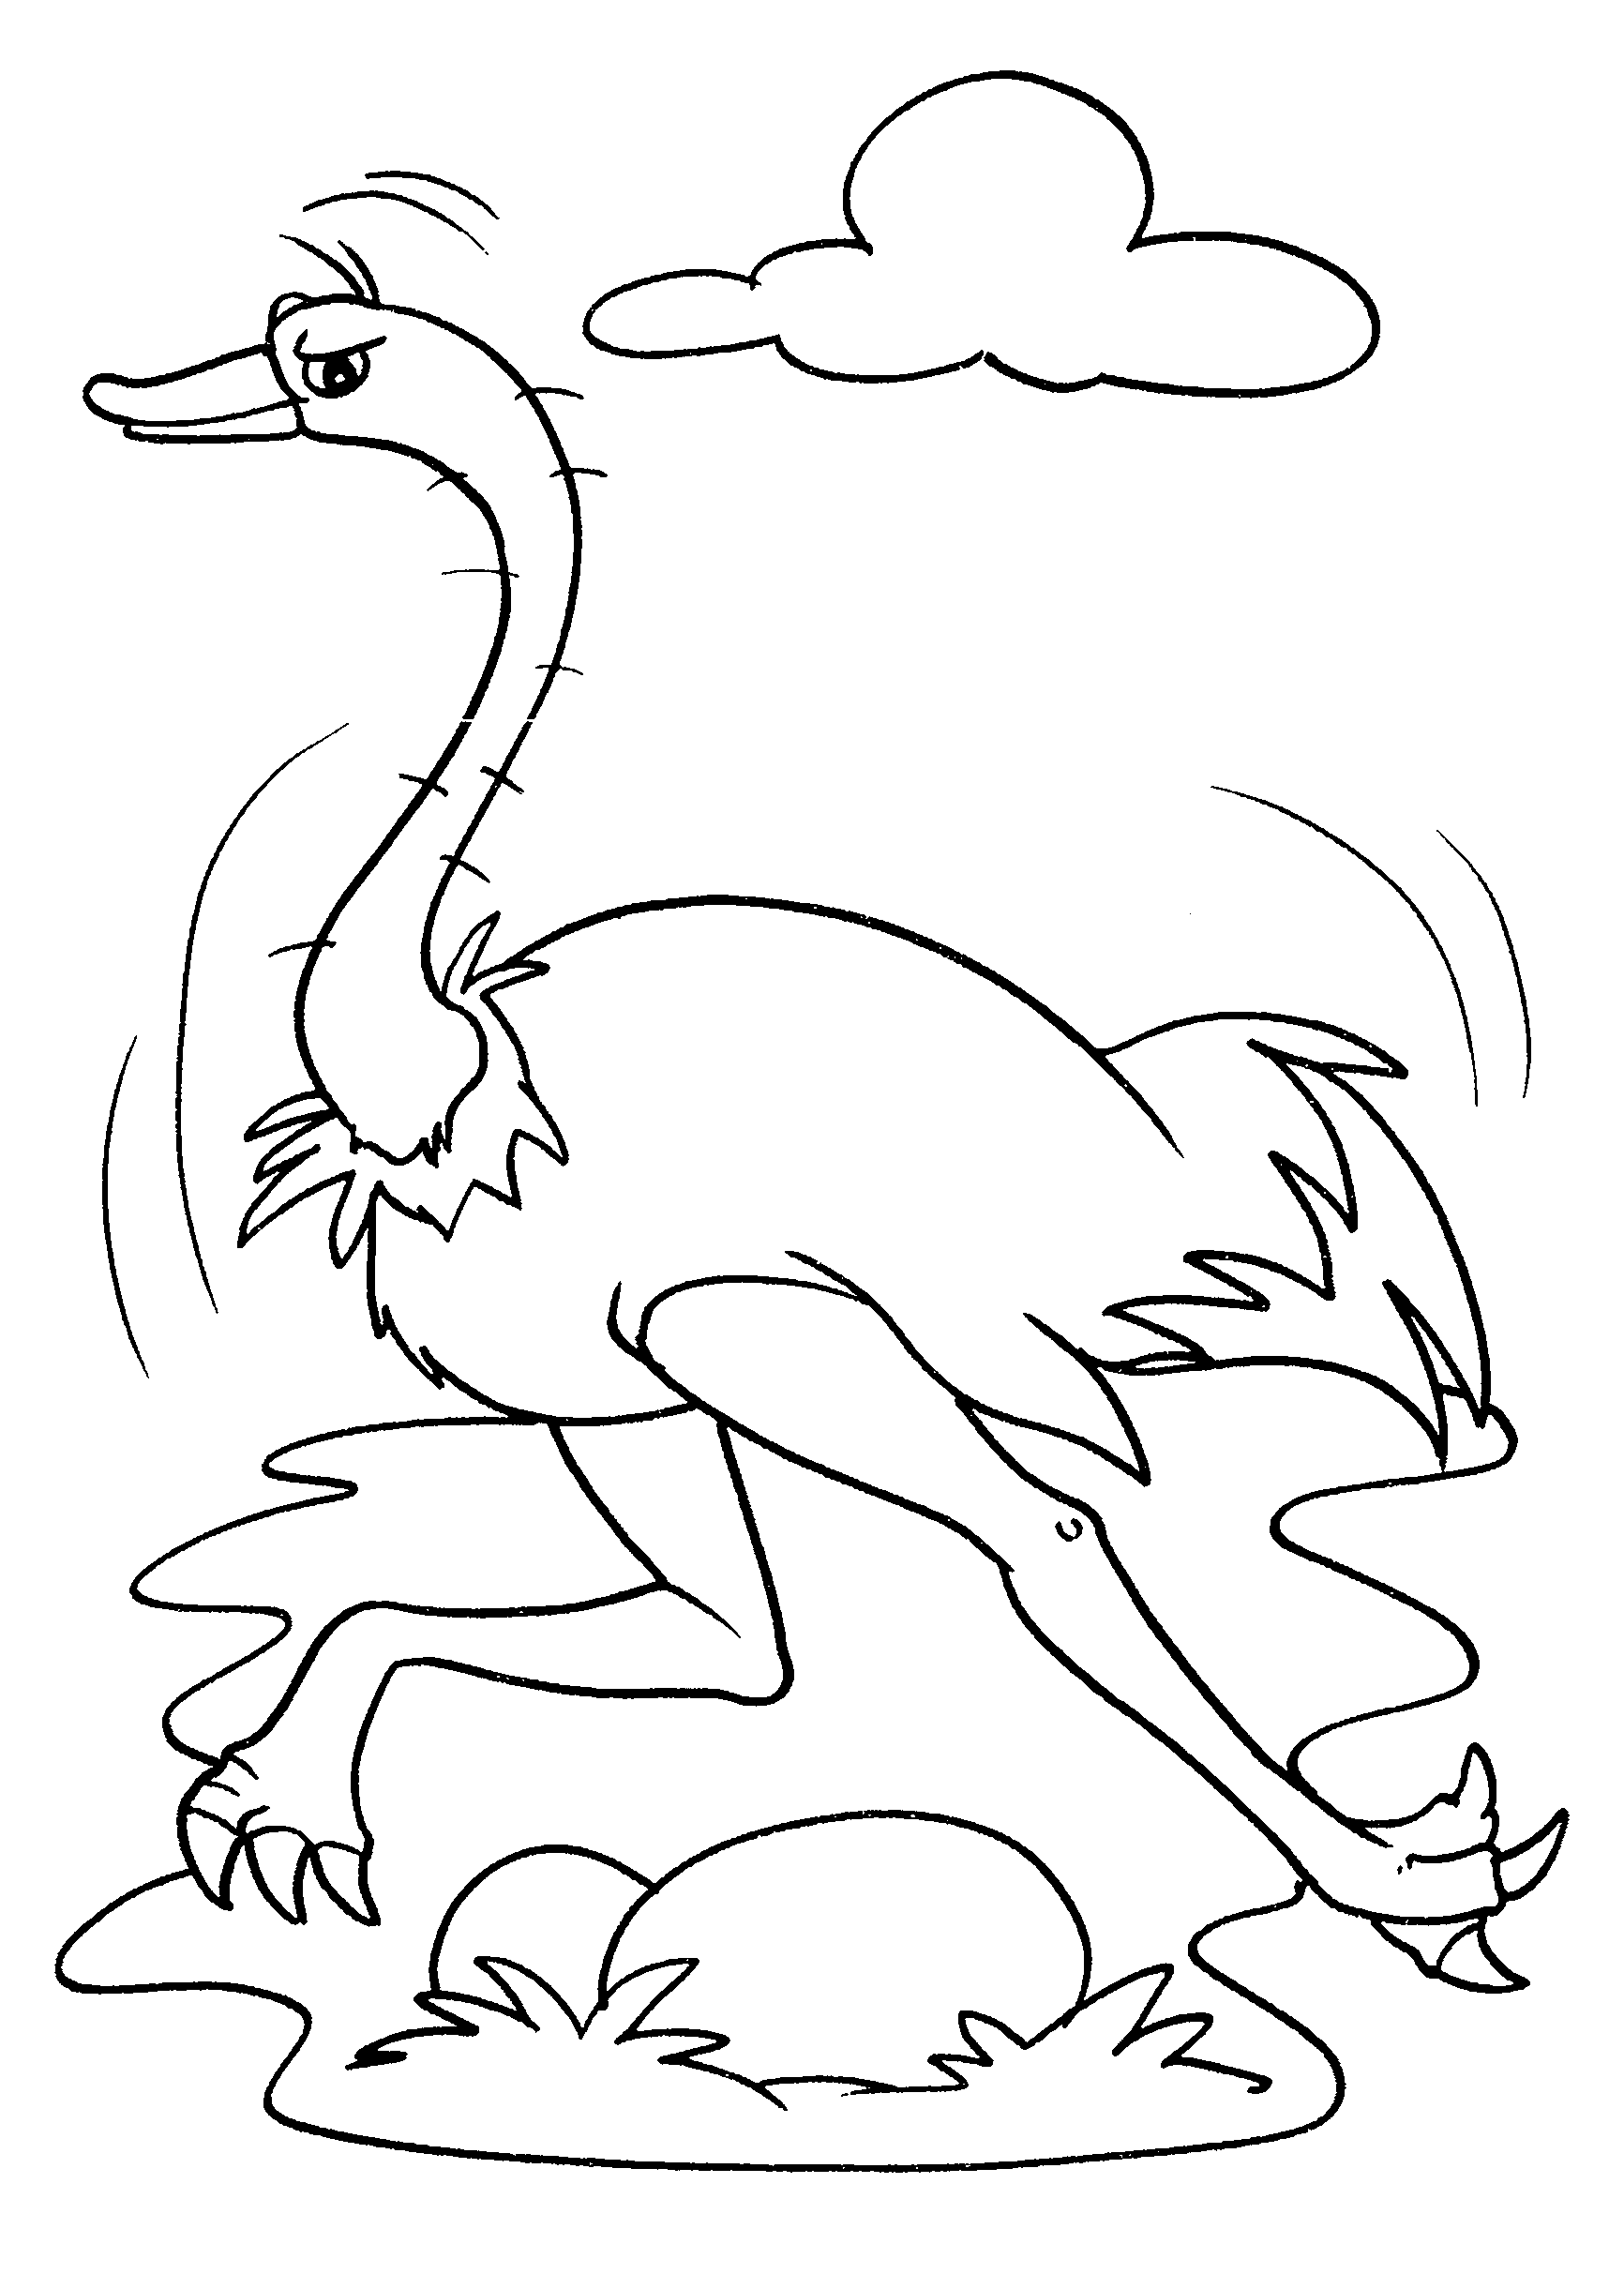 Рисунок страус и лиса 7 класс